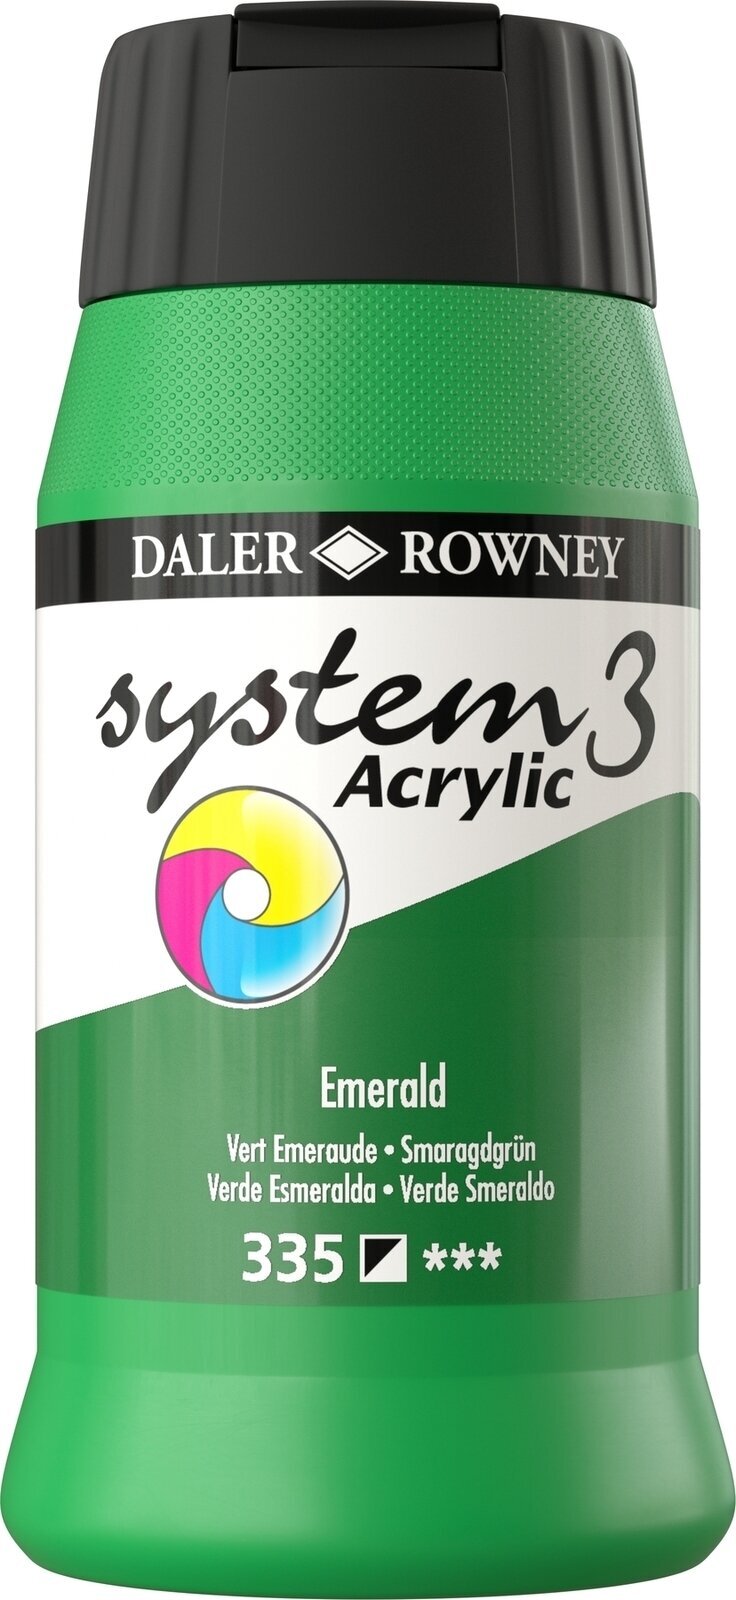 Akryylimaali Daler Rowney System3 Akryylimaali Emerald 500 ml 1 kpl